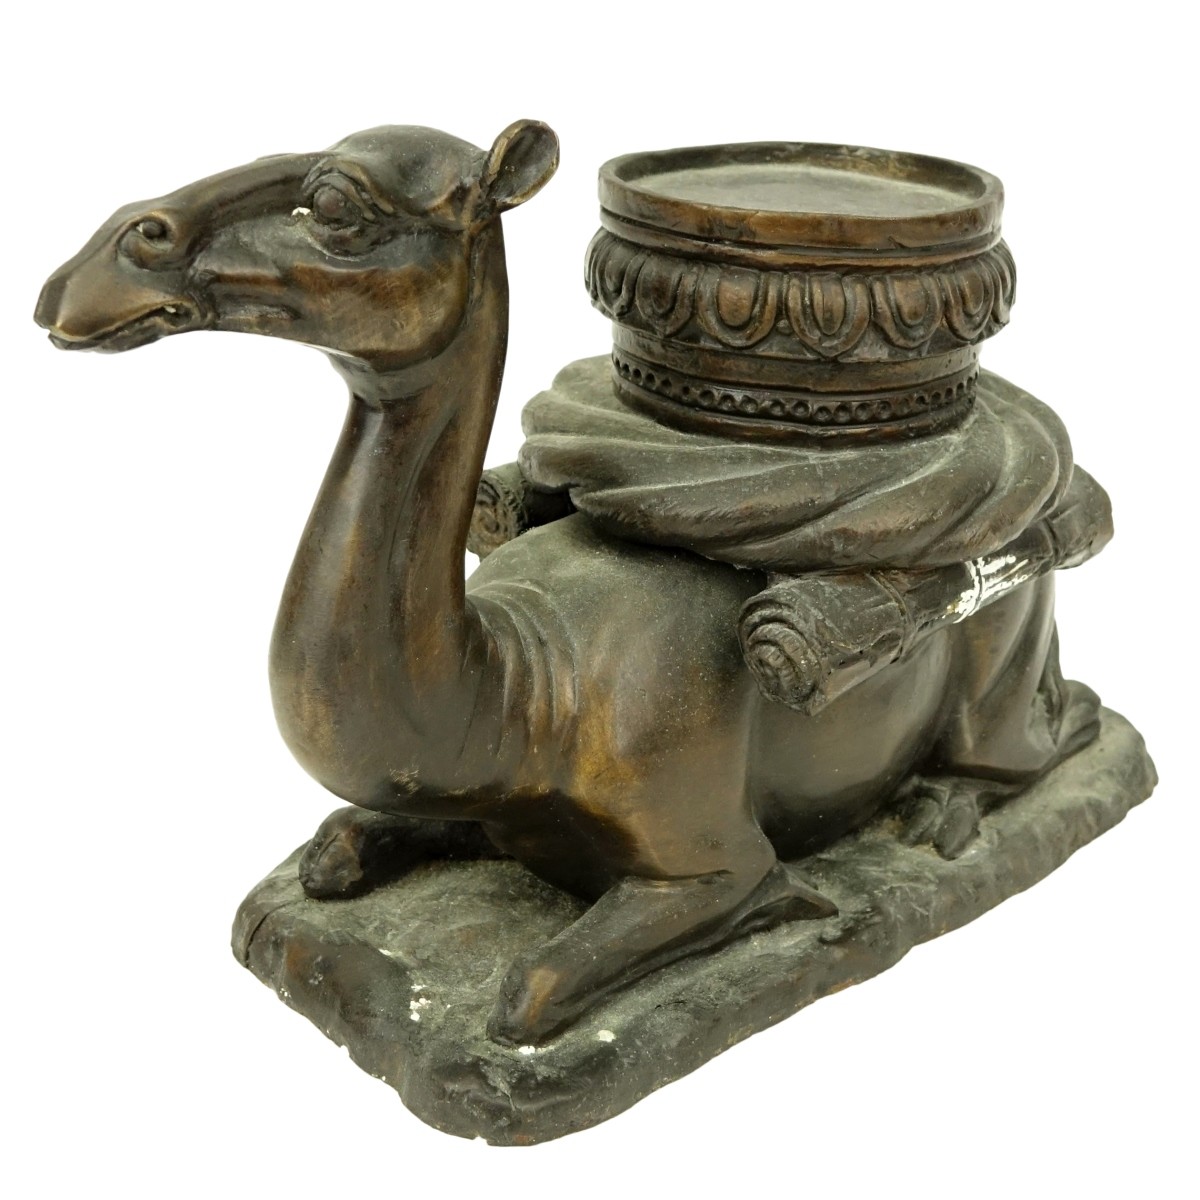 A Bronze Seated Camel Sculpture